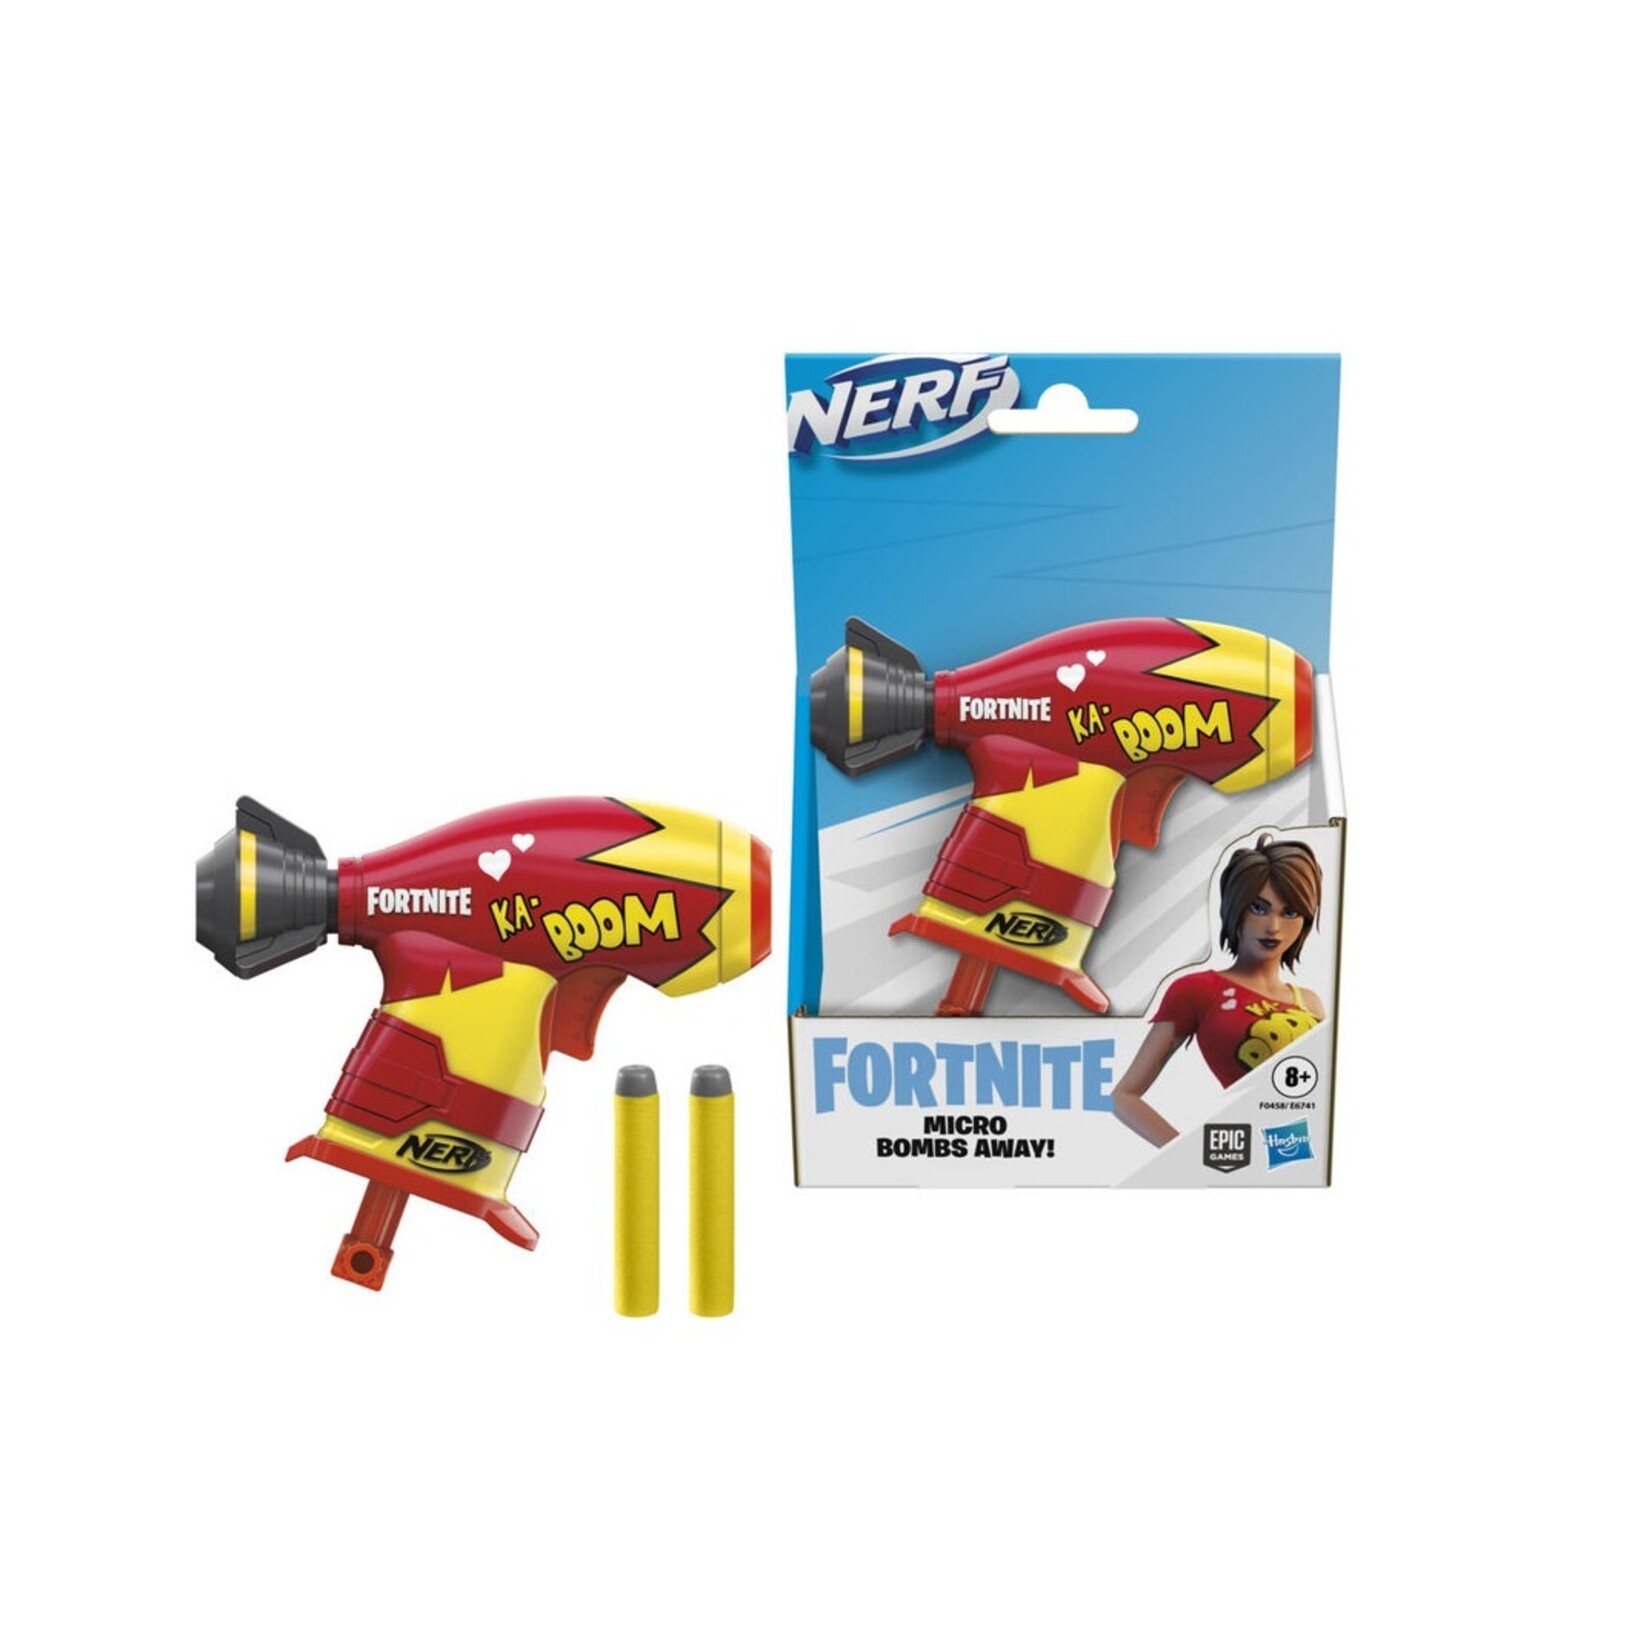 Hasbro Nerf - Microshot Fortnite - Bombs away